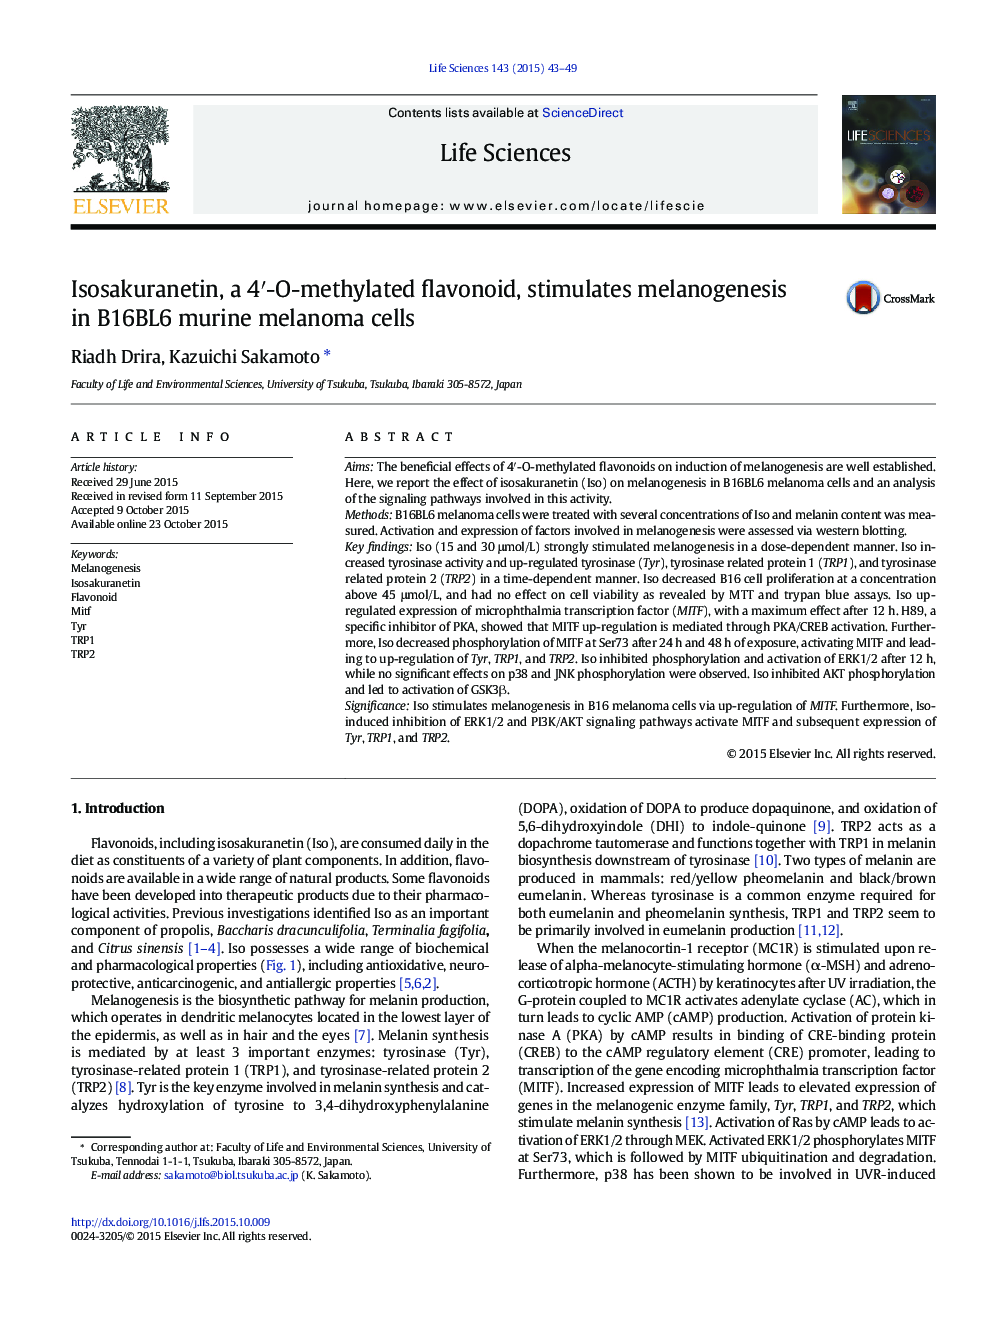 Isosakuranetin, a 4′-O-methylated flavonoid, stimulates melanogenesis in B16BL6 murine melanoma cells